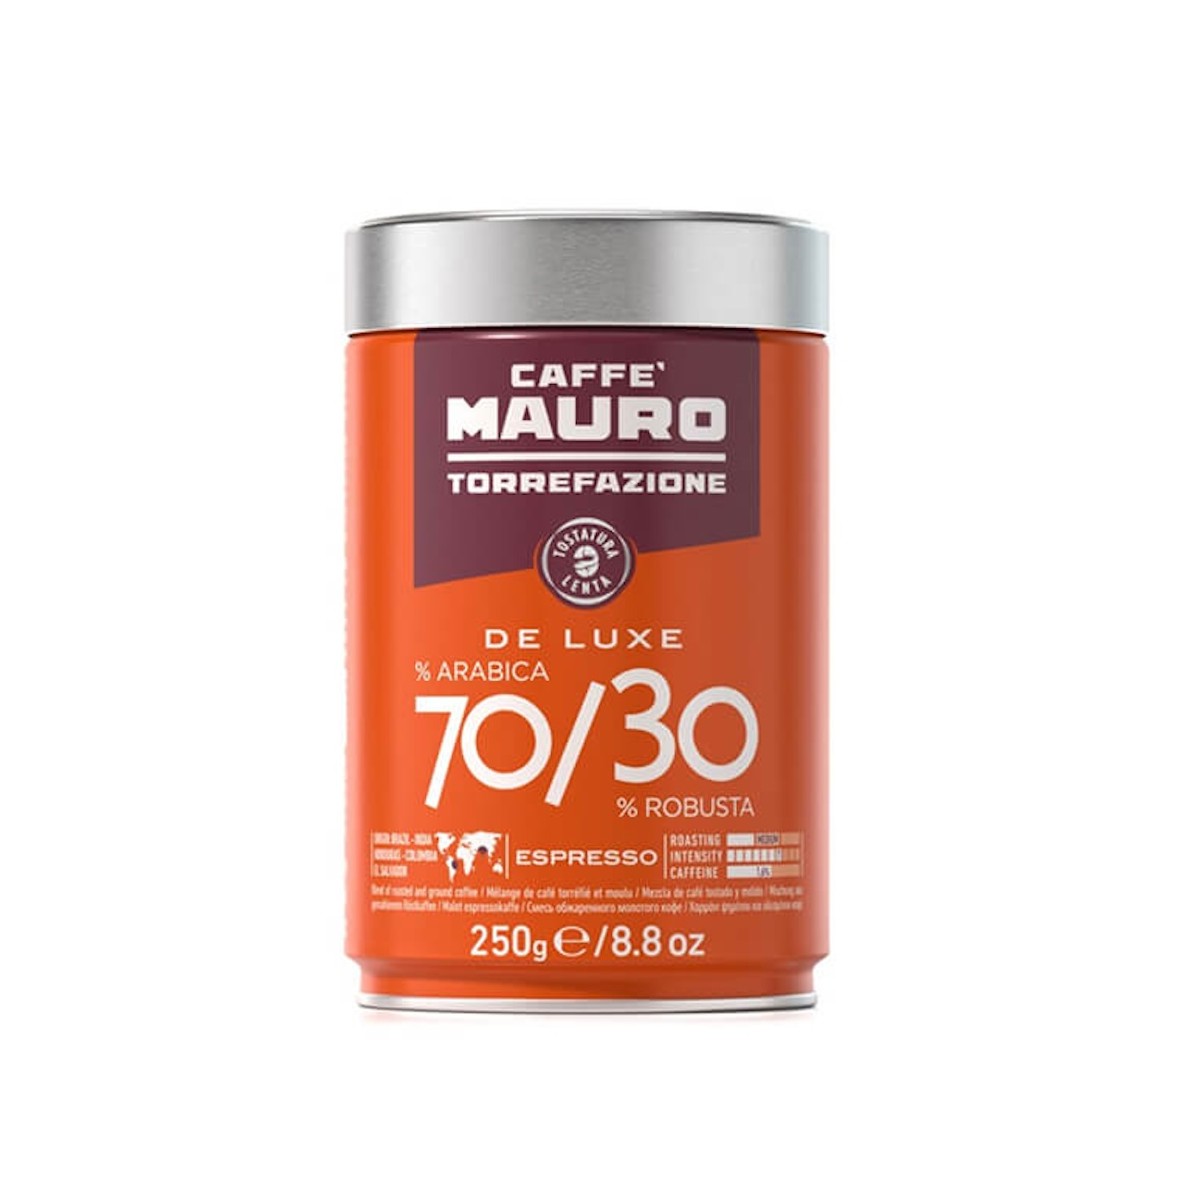 MAURO DE LUXE ground coffee - 250 g